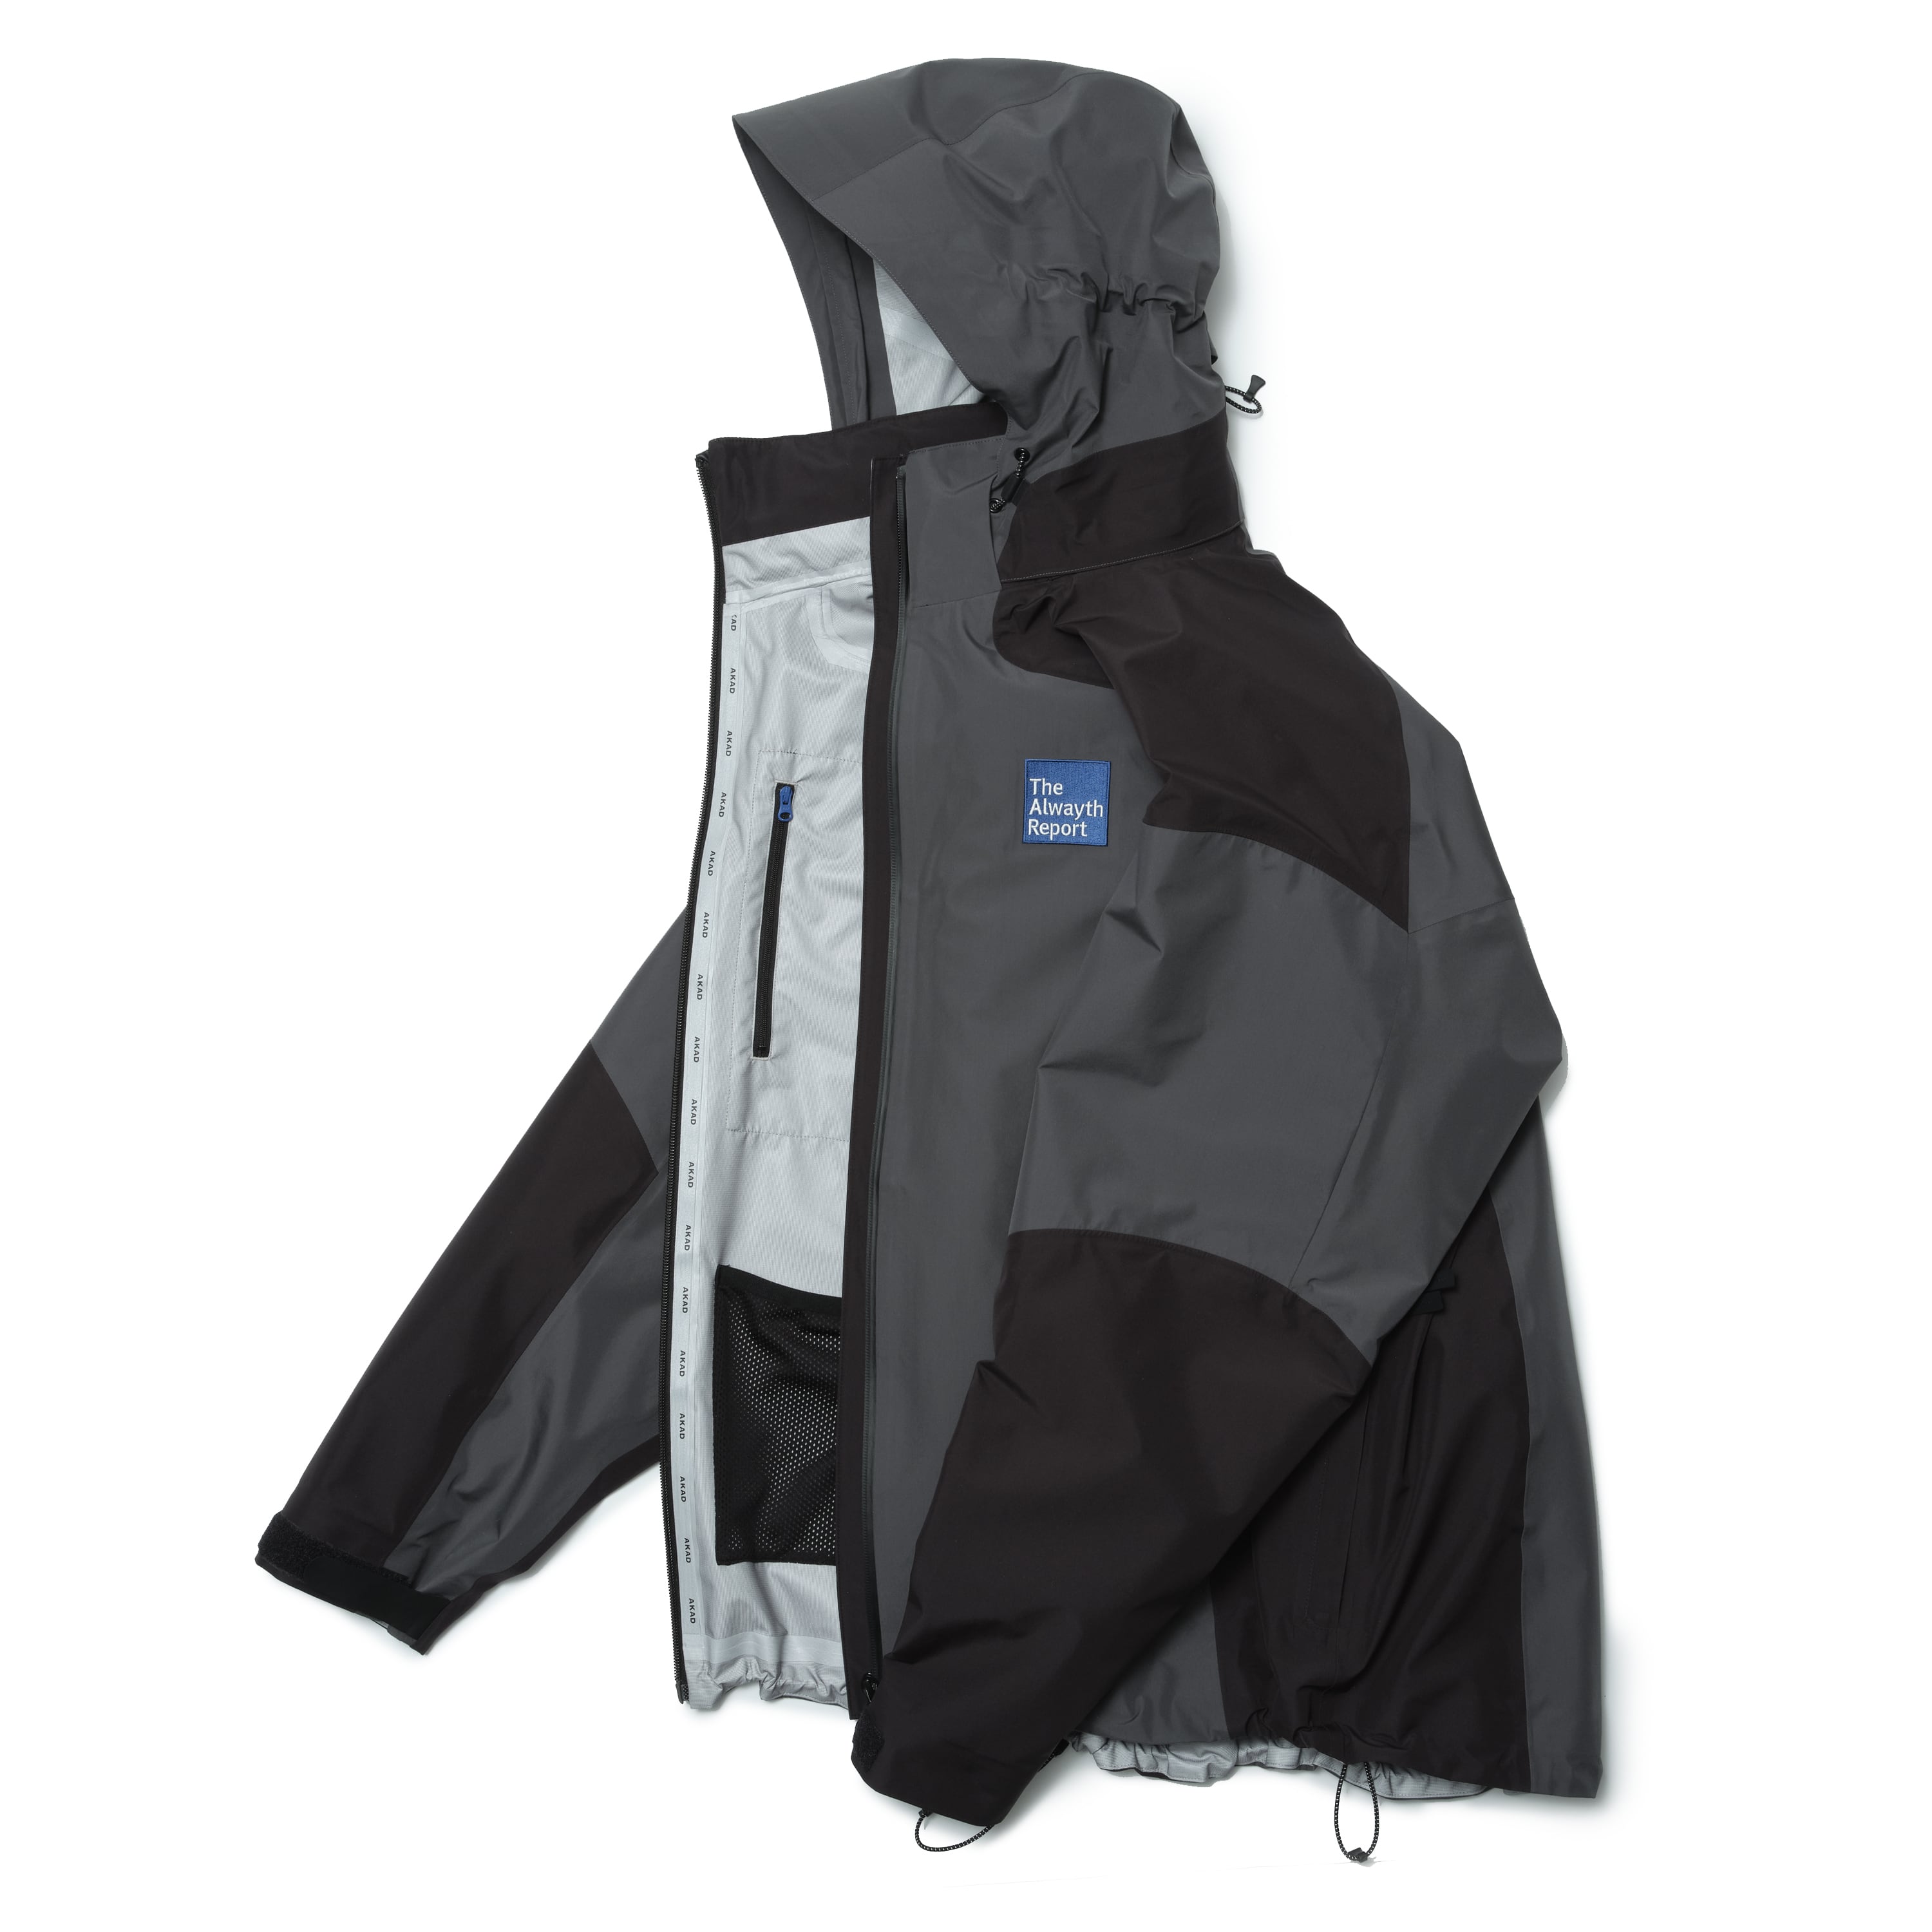 [AKAD038] Alwayth all weather proof shell jacket by AKAD - GRAY